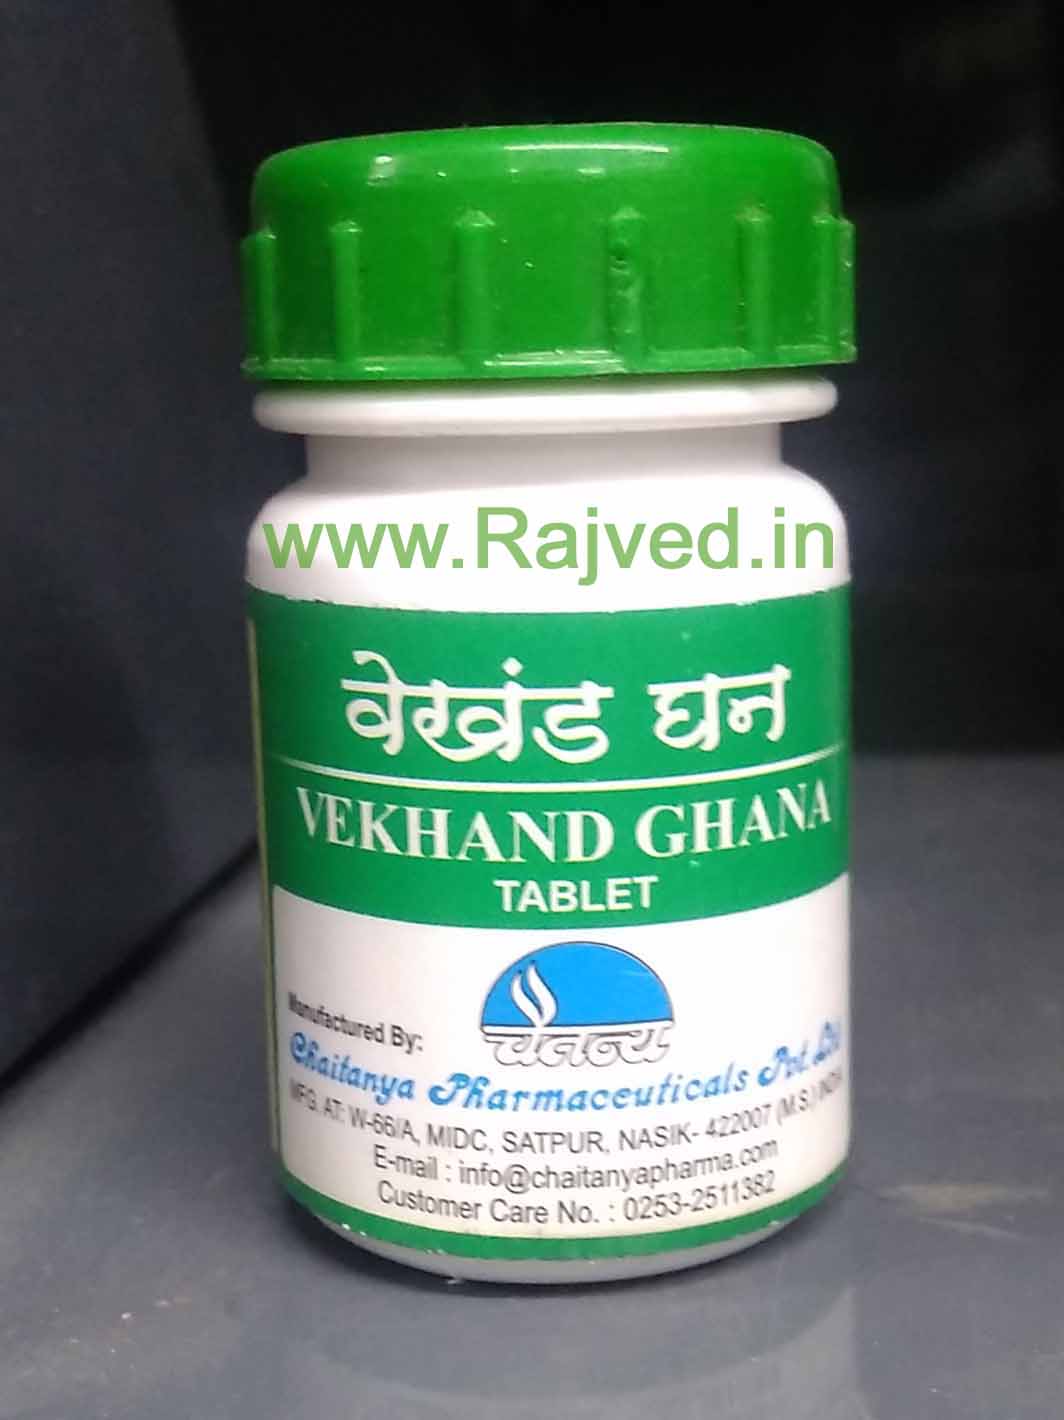 vekhand ghana 2000tab upto 20% off free shipping chaitanya pharmaceuticals